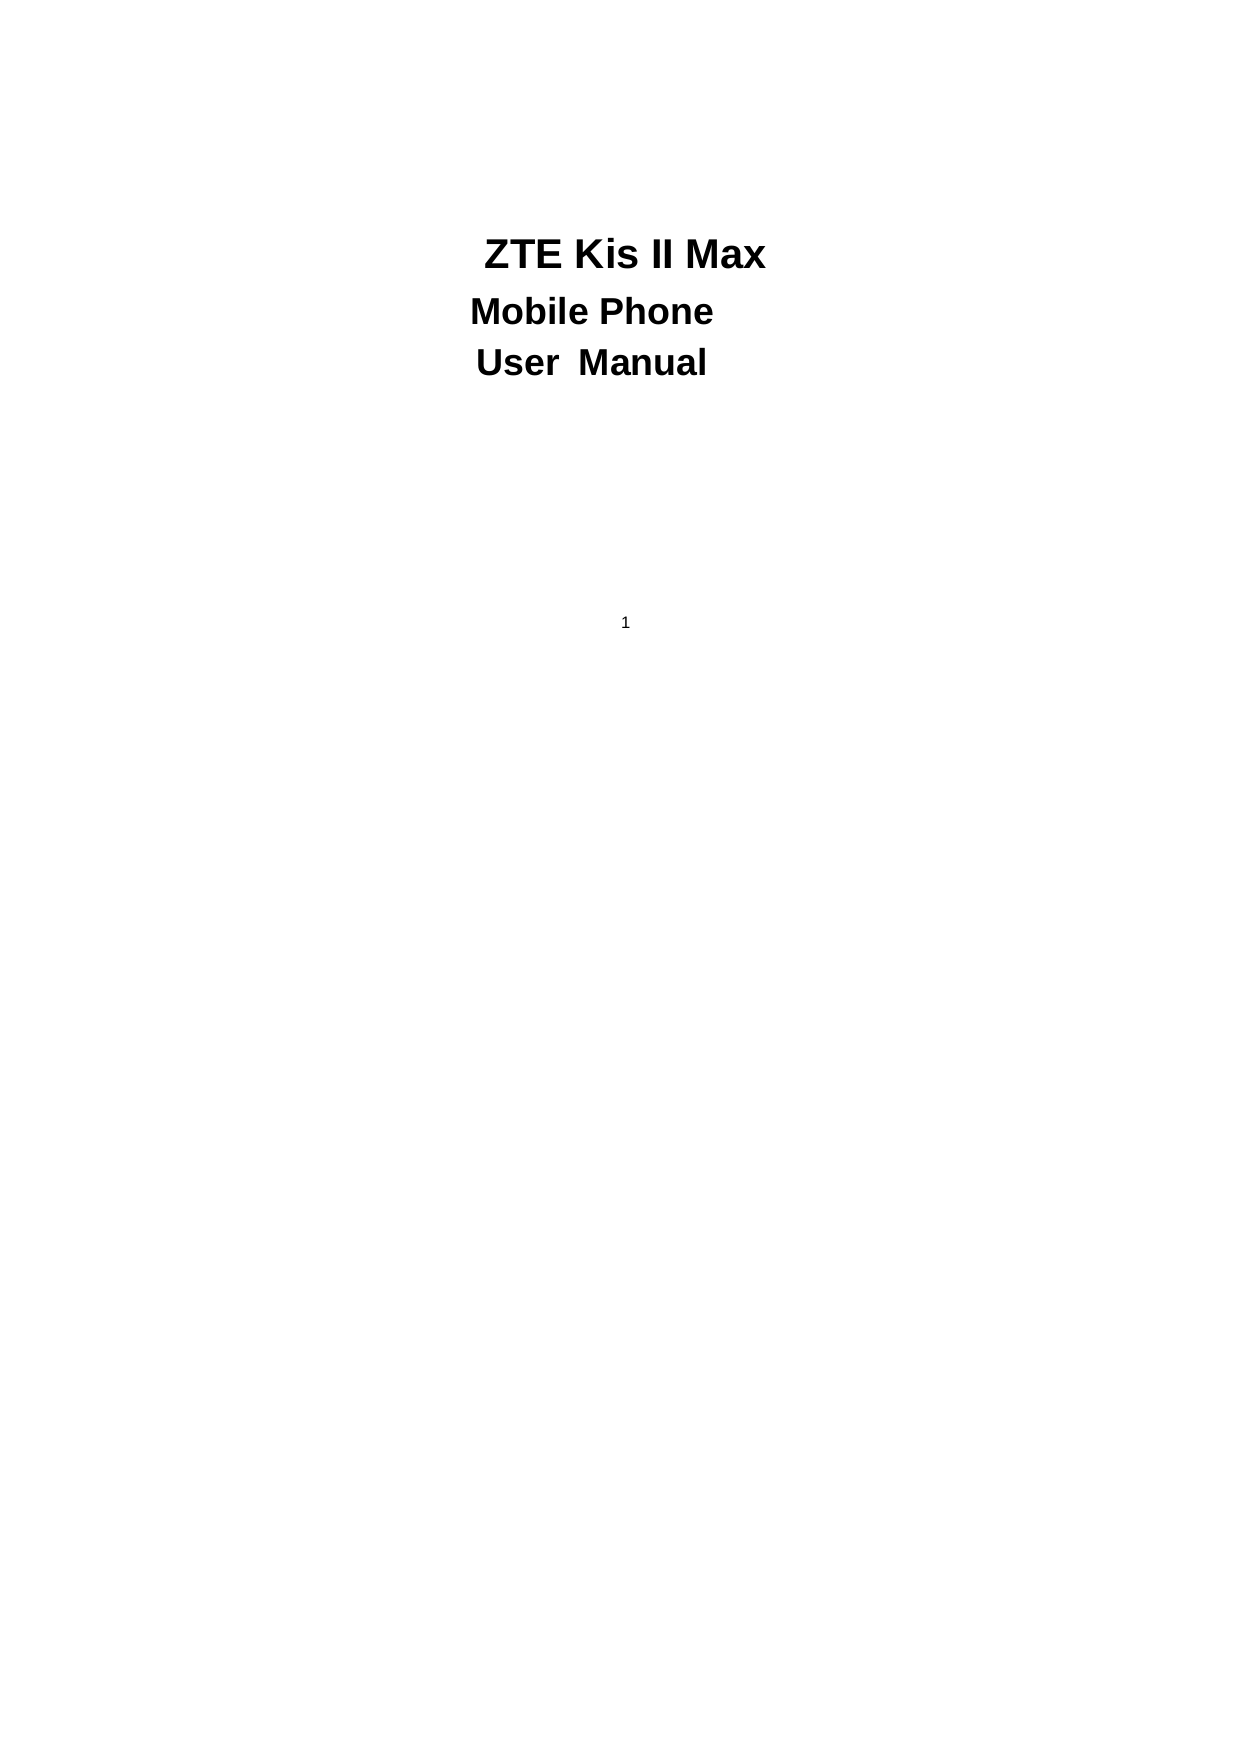  1     ZTE Kis II Max Mobile Phone User Manual   